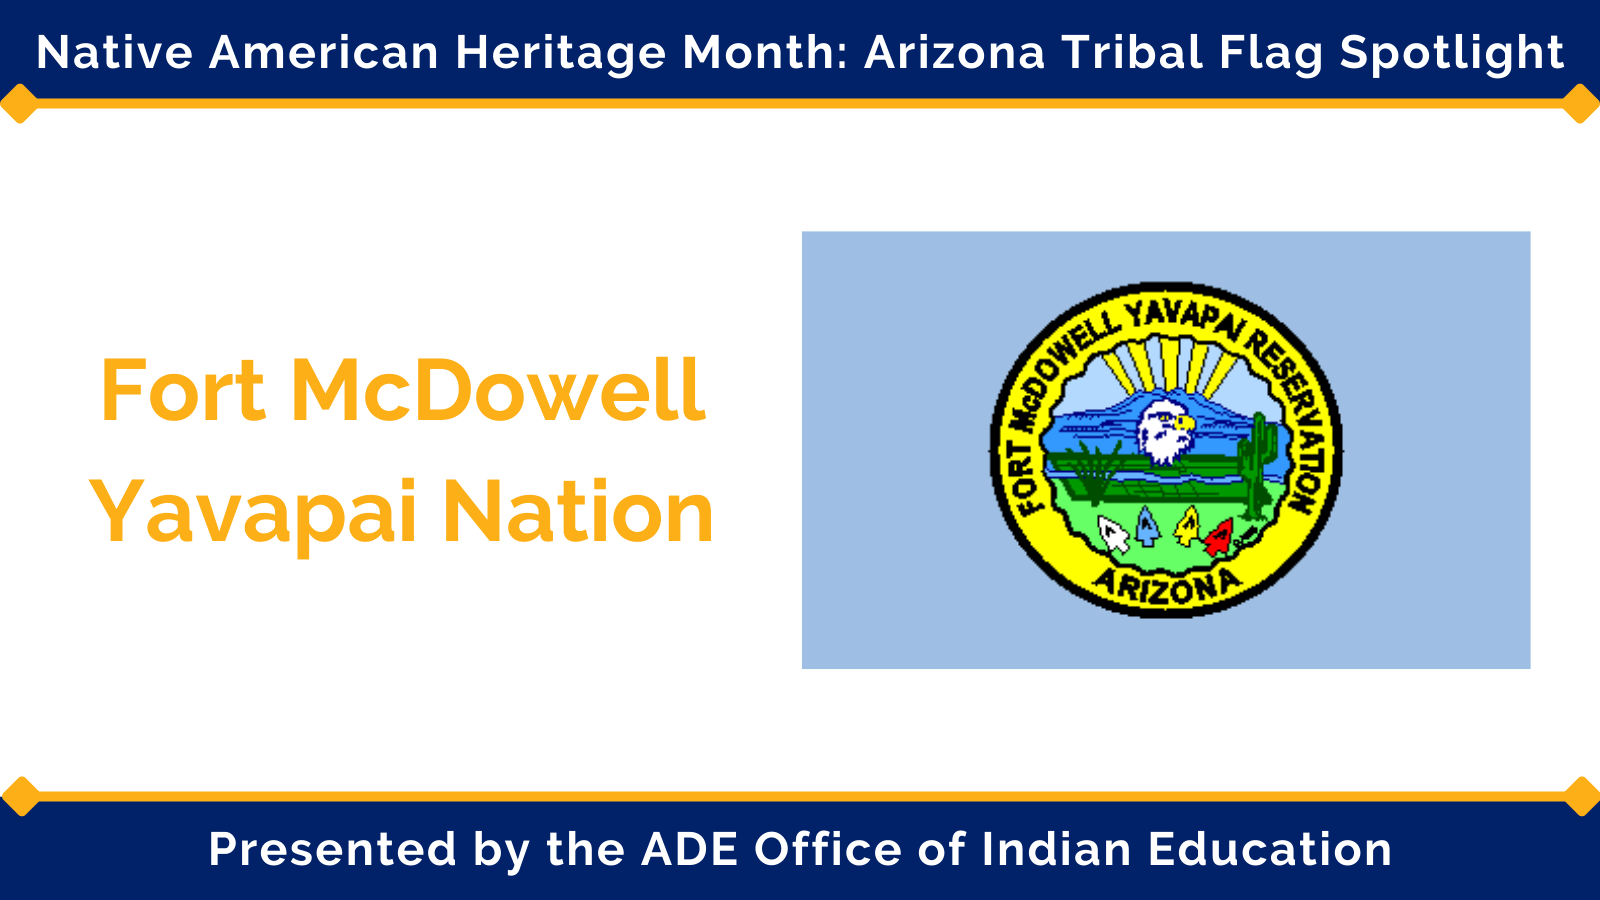 Fort McDowell Yavapai Nation